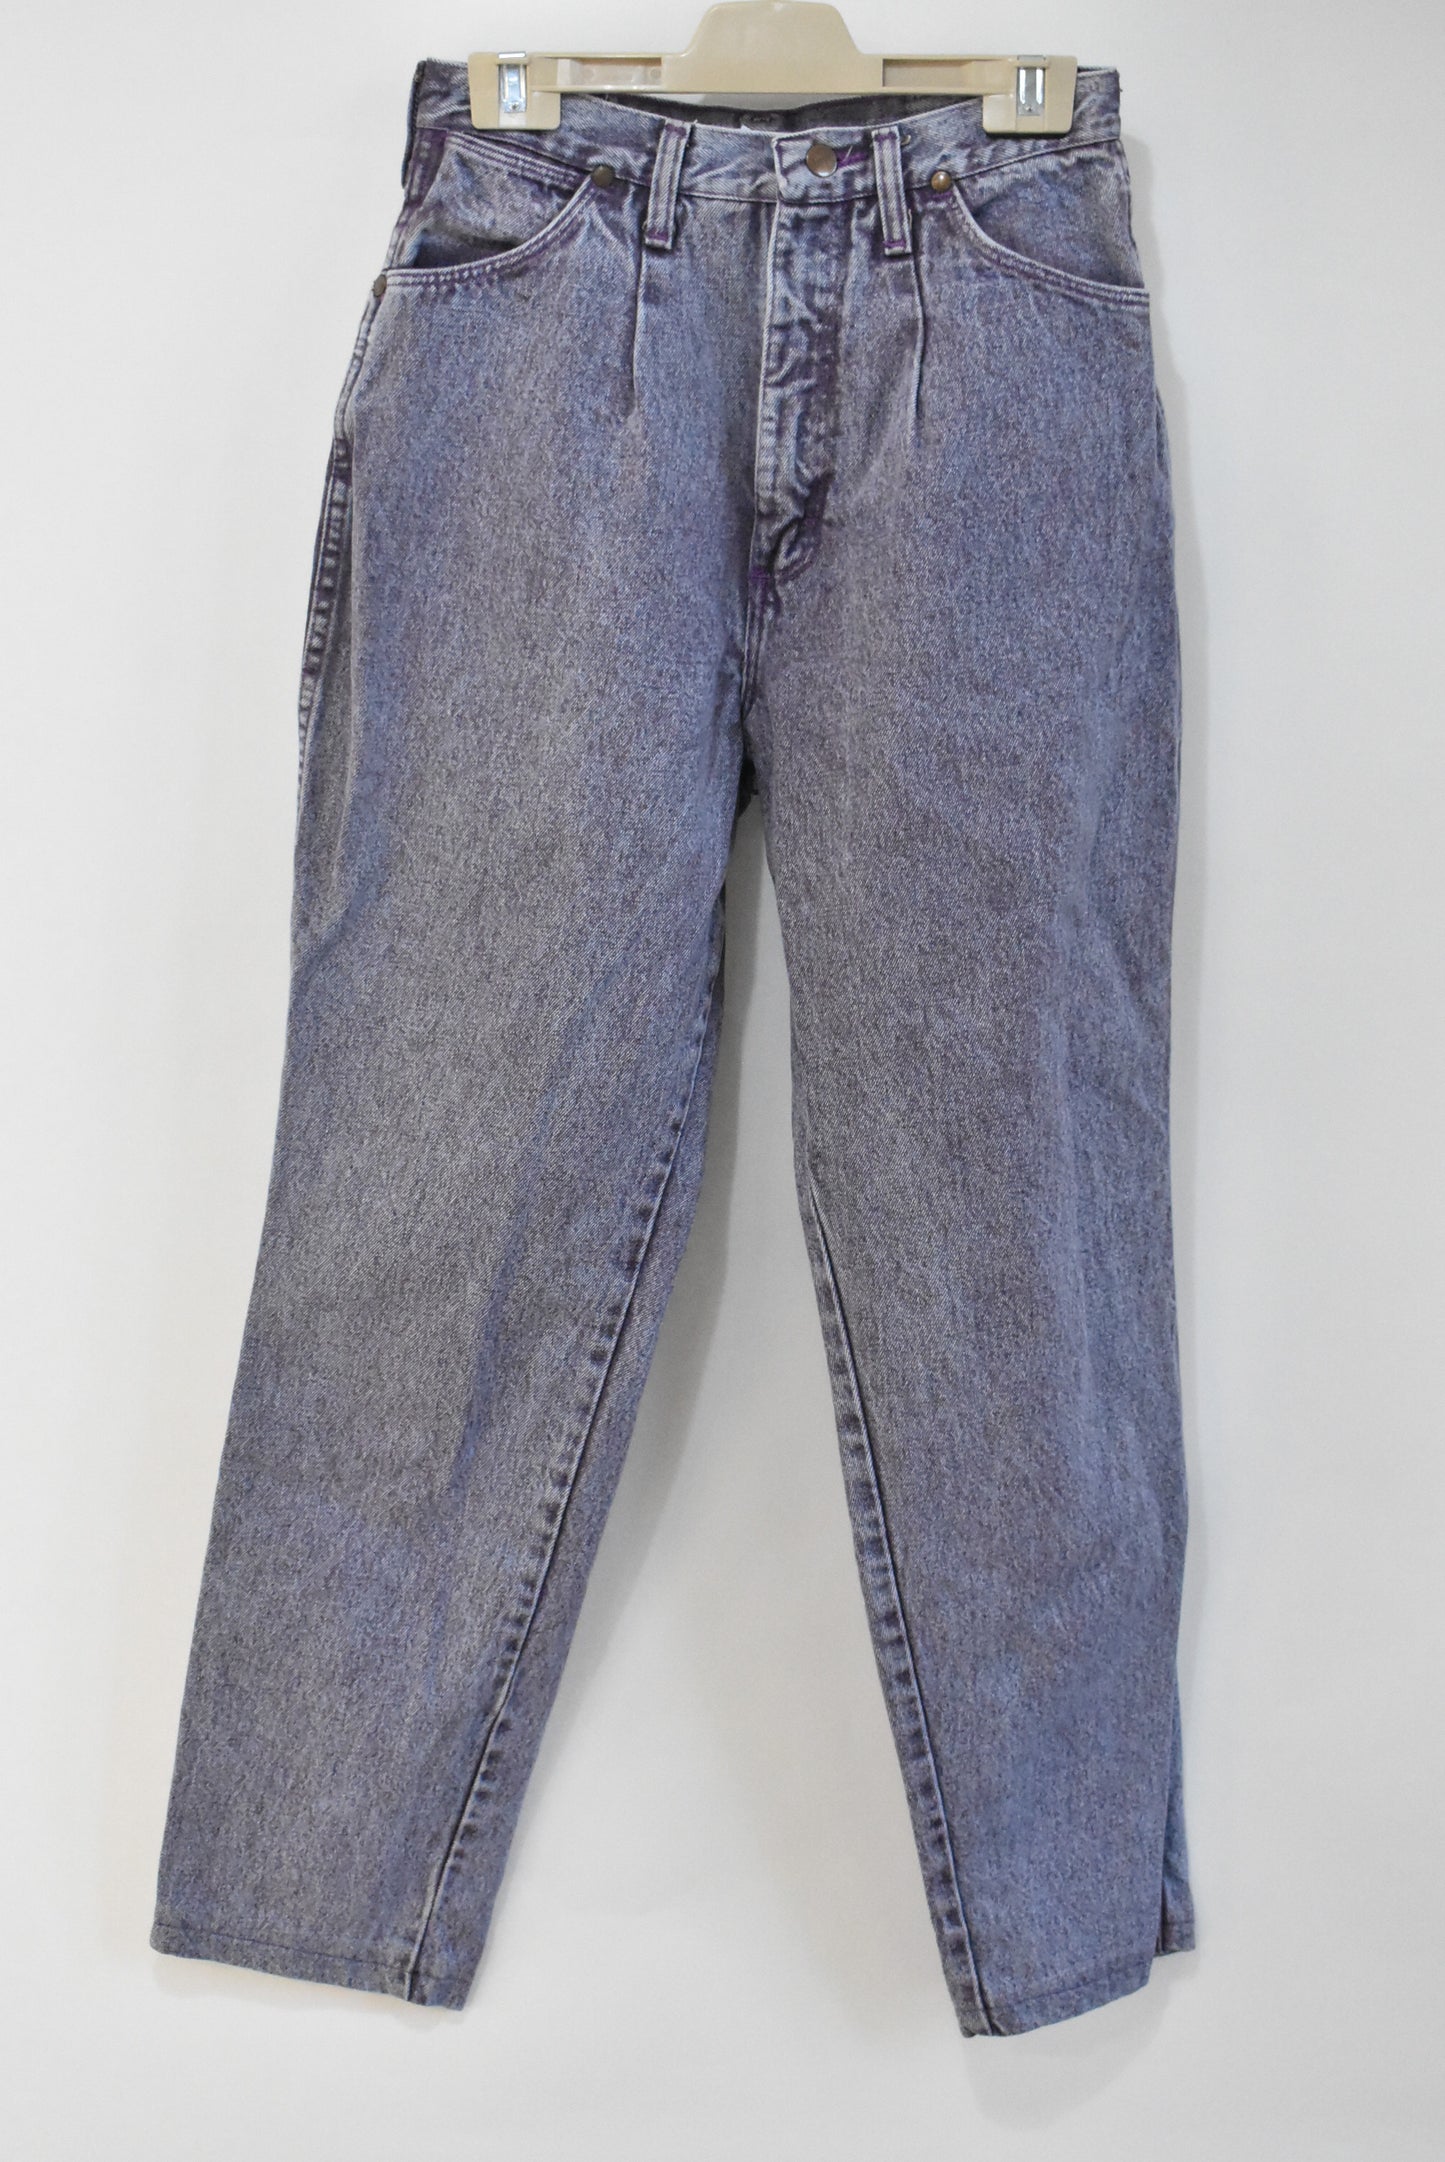 Wrangler acid wash, purple hue high rise jeans, 13